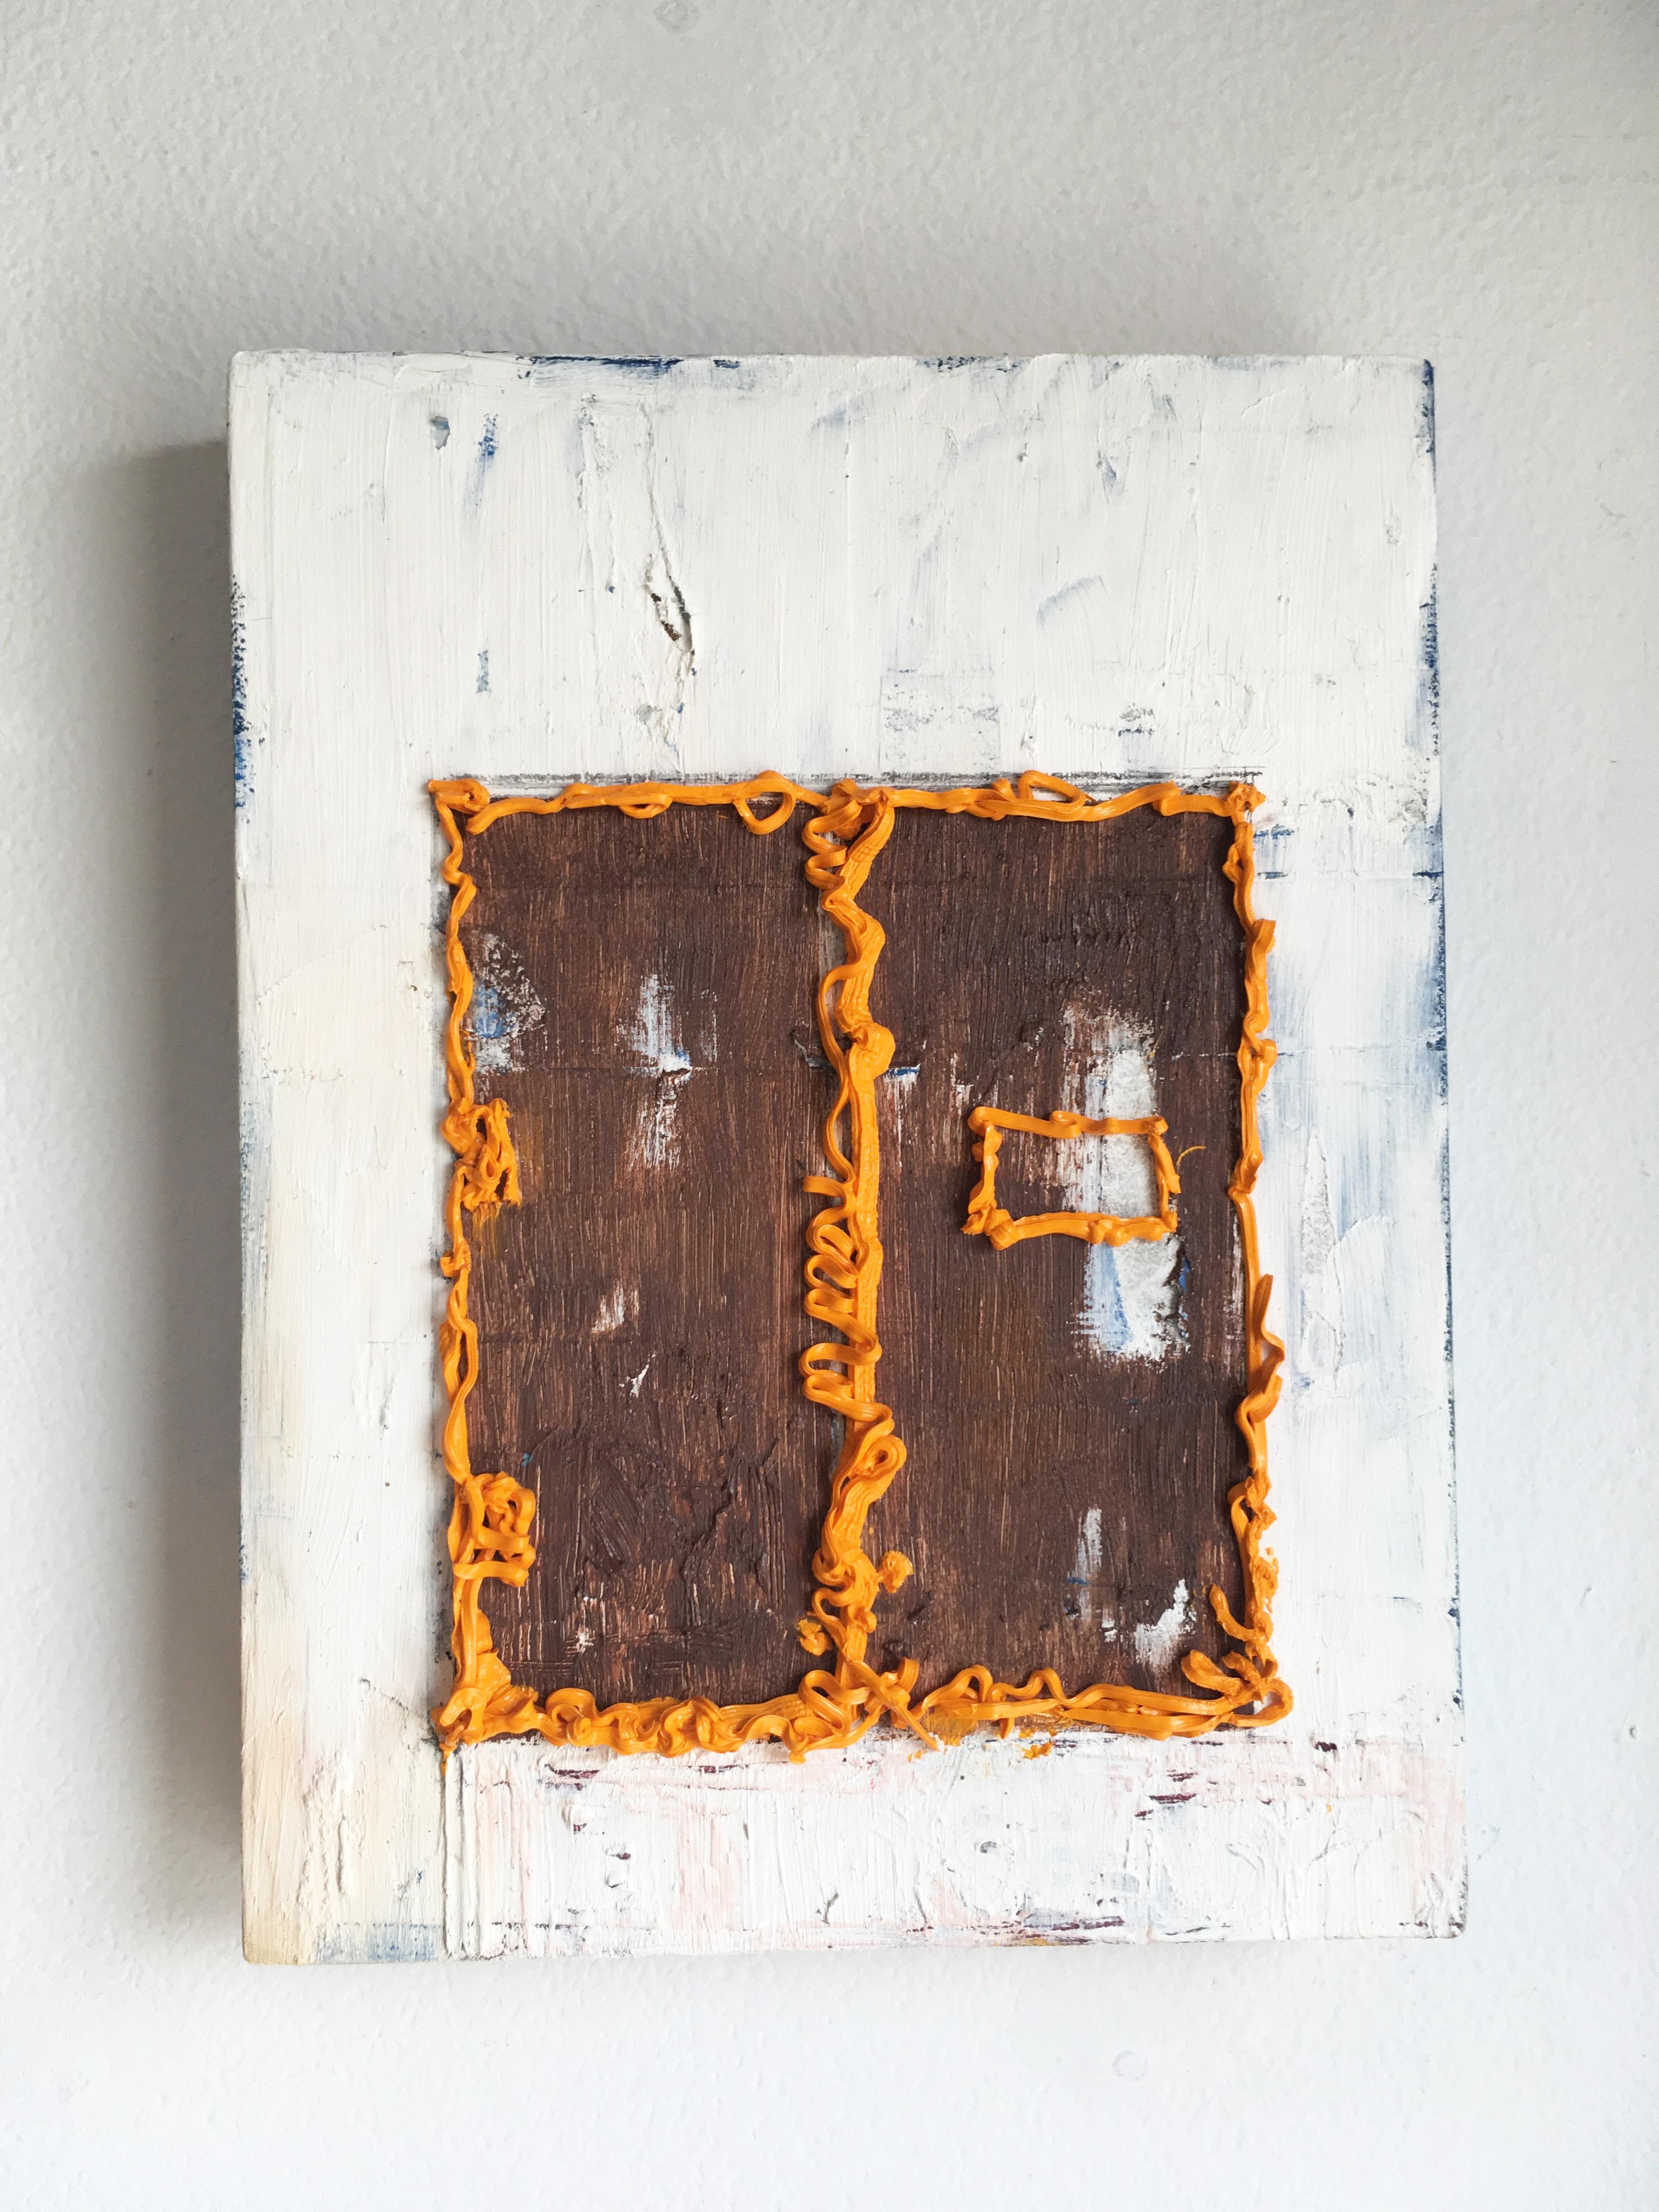 Francesca Reyes Figurative Painting - "Door #16 (Insulation)" Oil on panel, Figurative abstraction, architecture, door